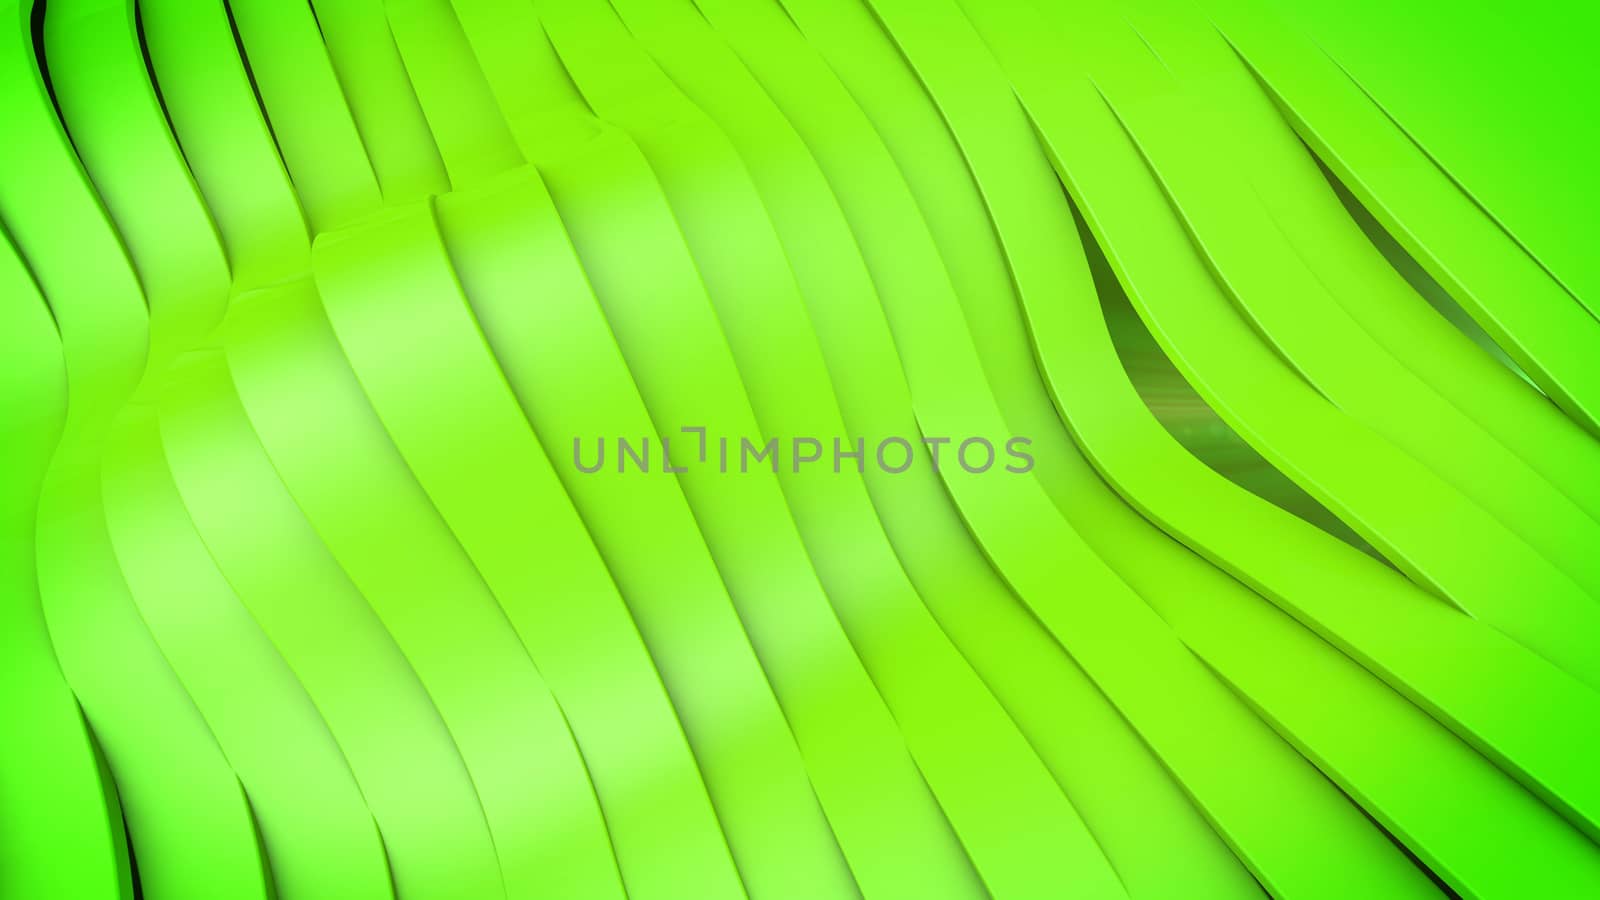 Abstract wave stripes background, digital 3d illustration.